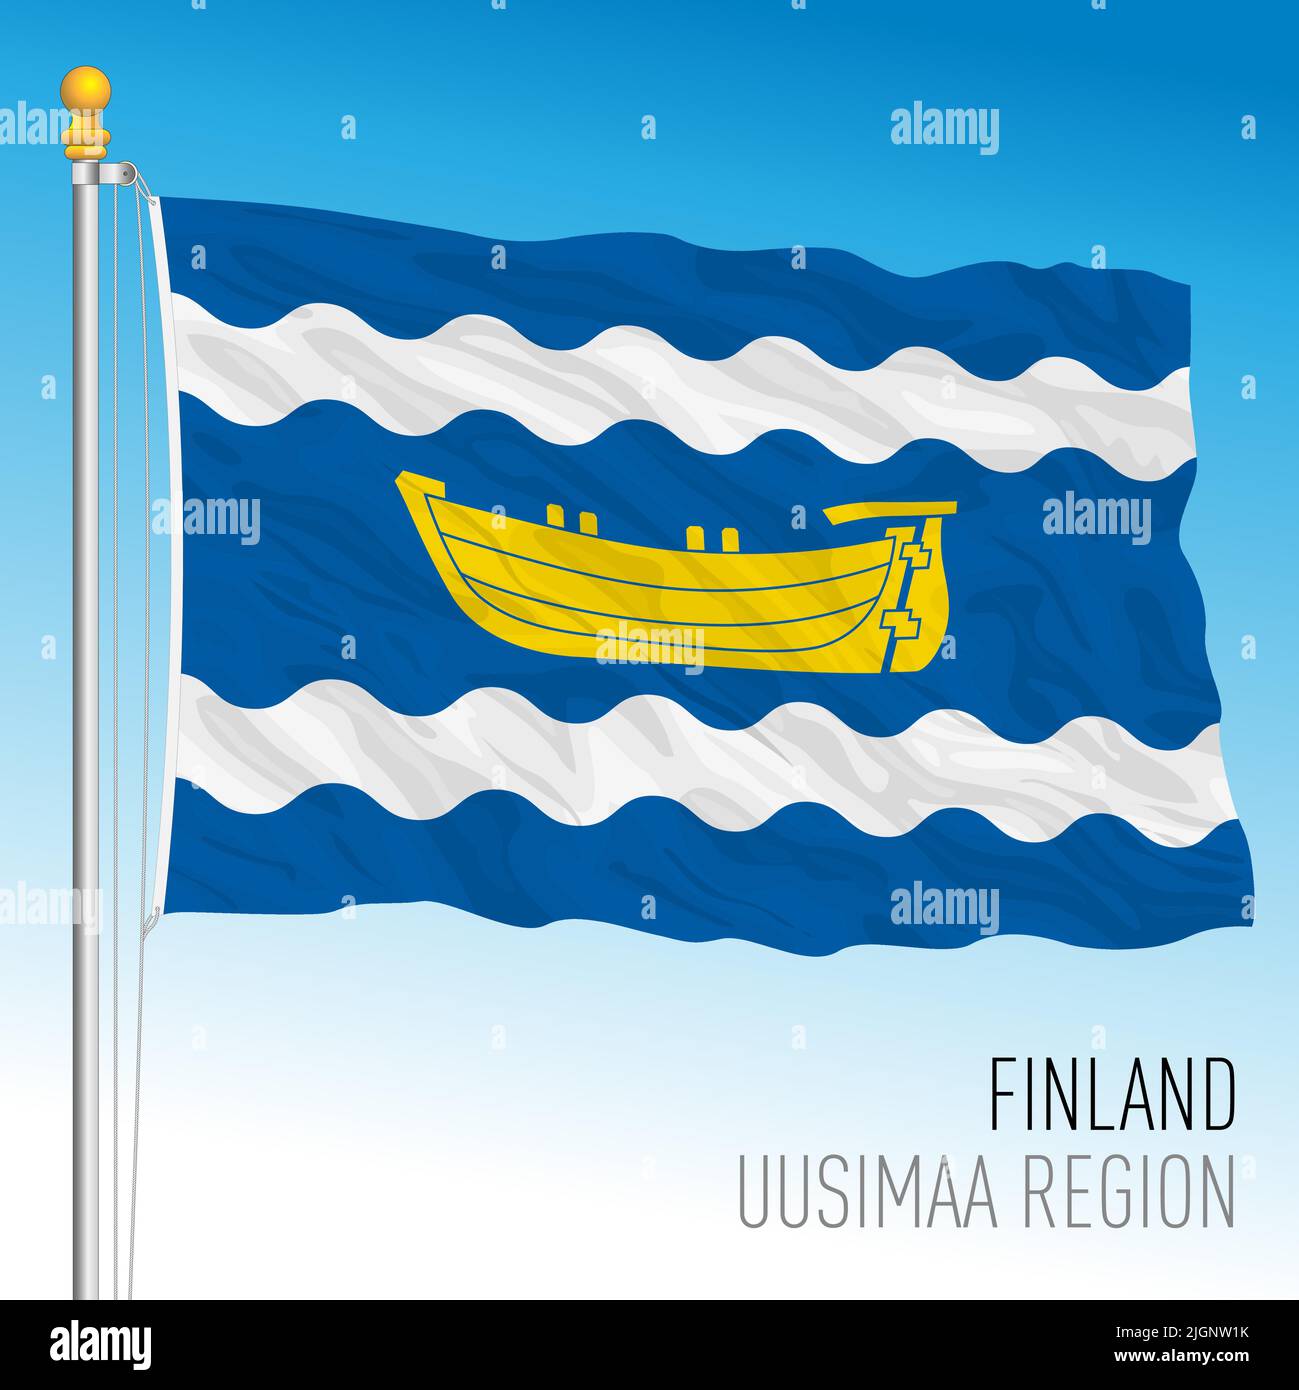 Uusimaa regional flag, Republic of Finland, EU, vector illustration Stock Vector